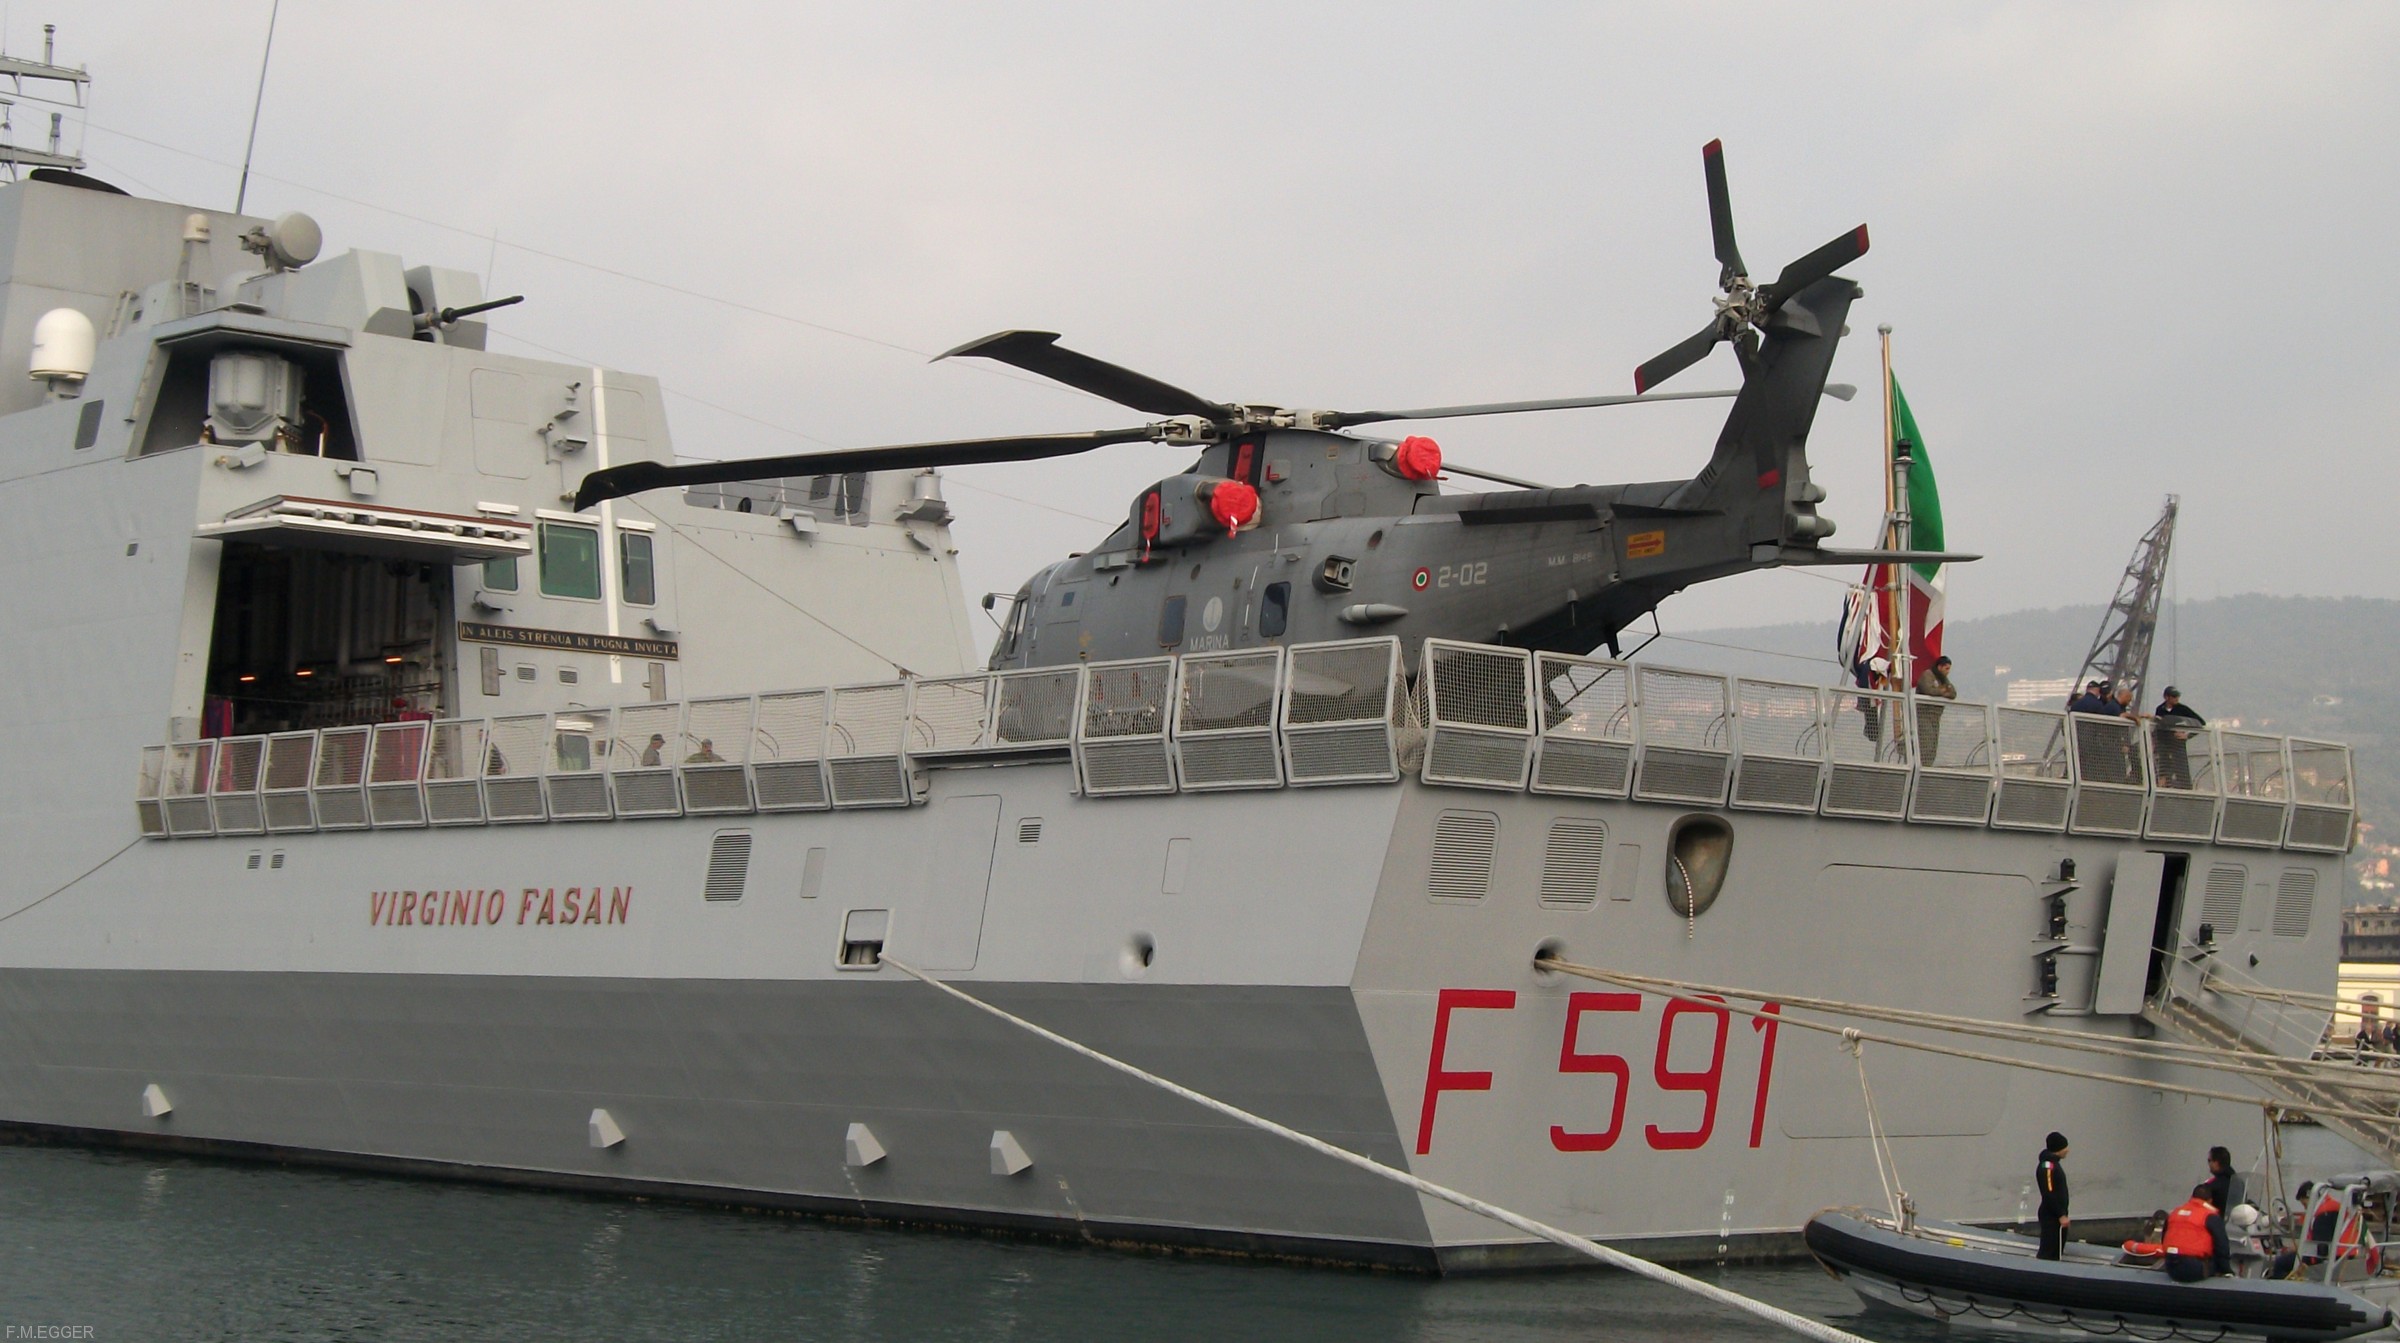 f-591 virginio fasan fremm bergamini class frigate italian navy marine militare 08 agusta westland sh-101 eh101 helicopter